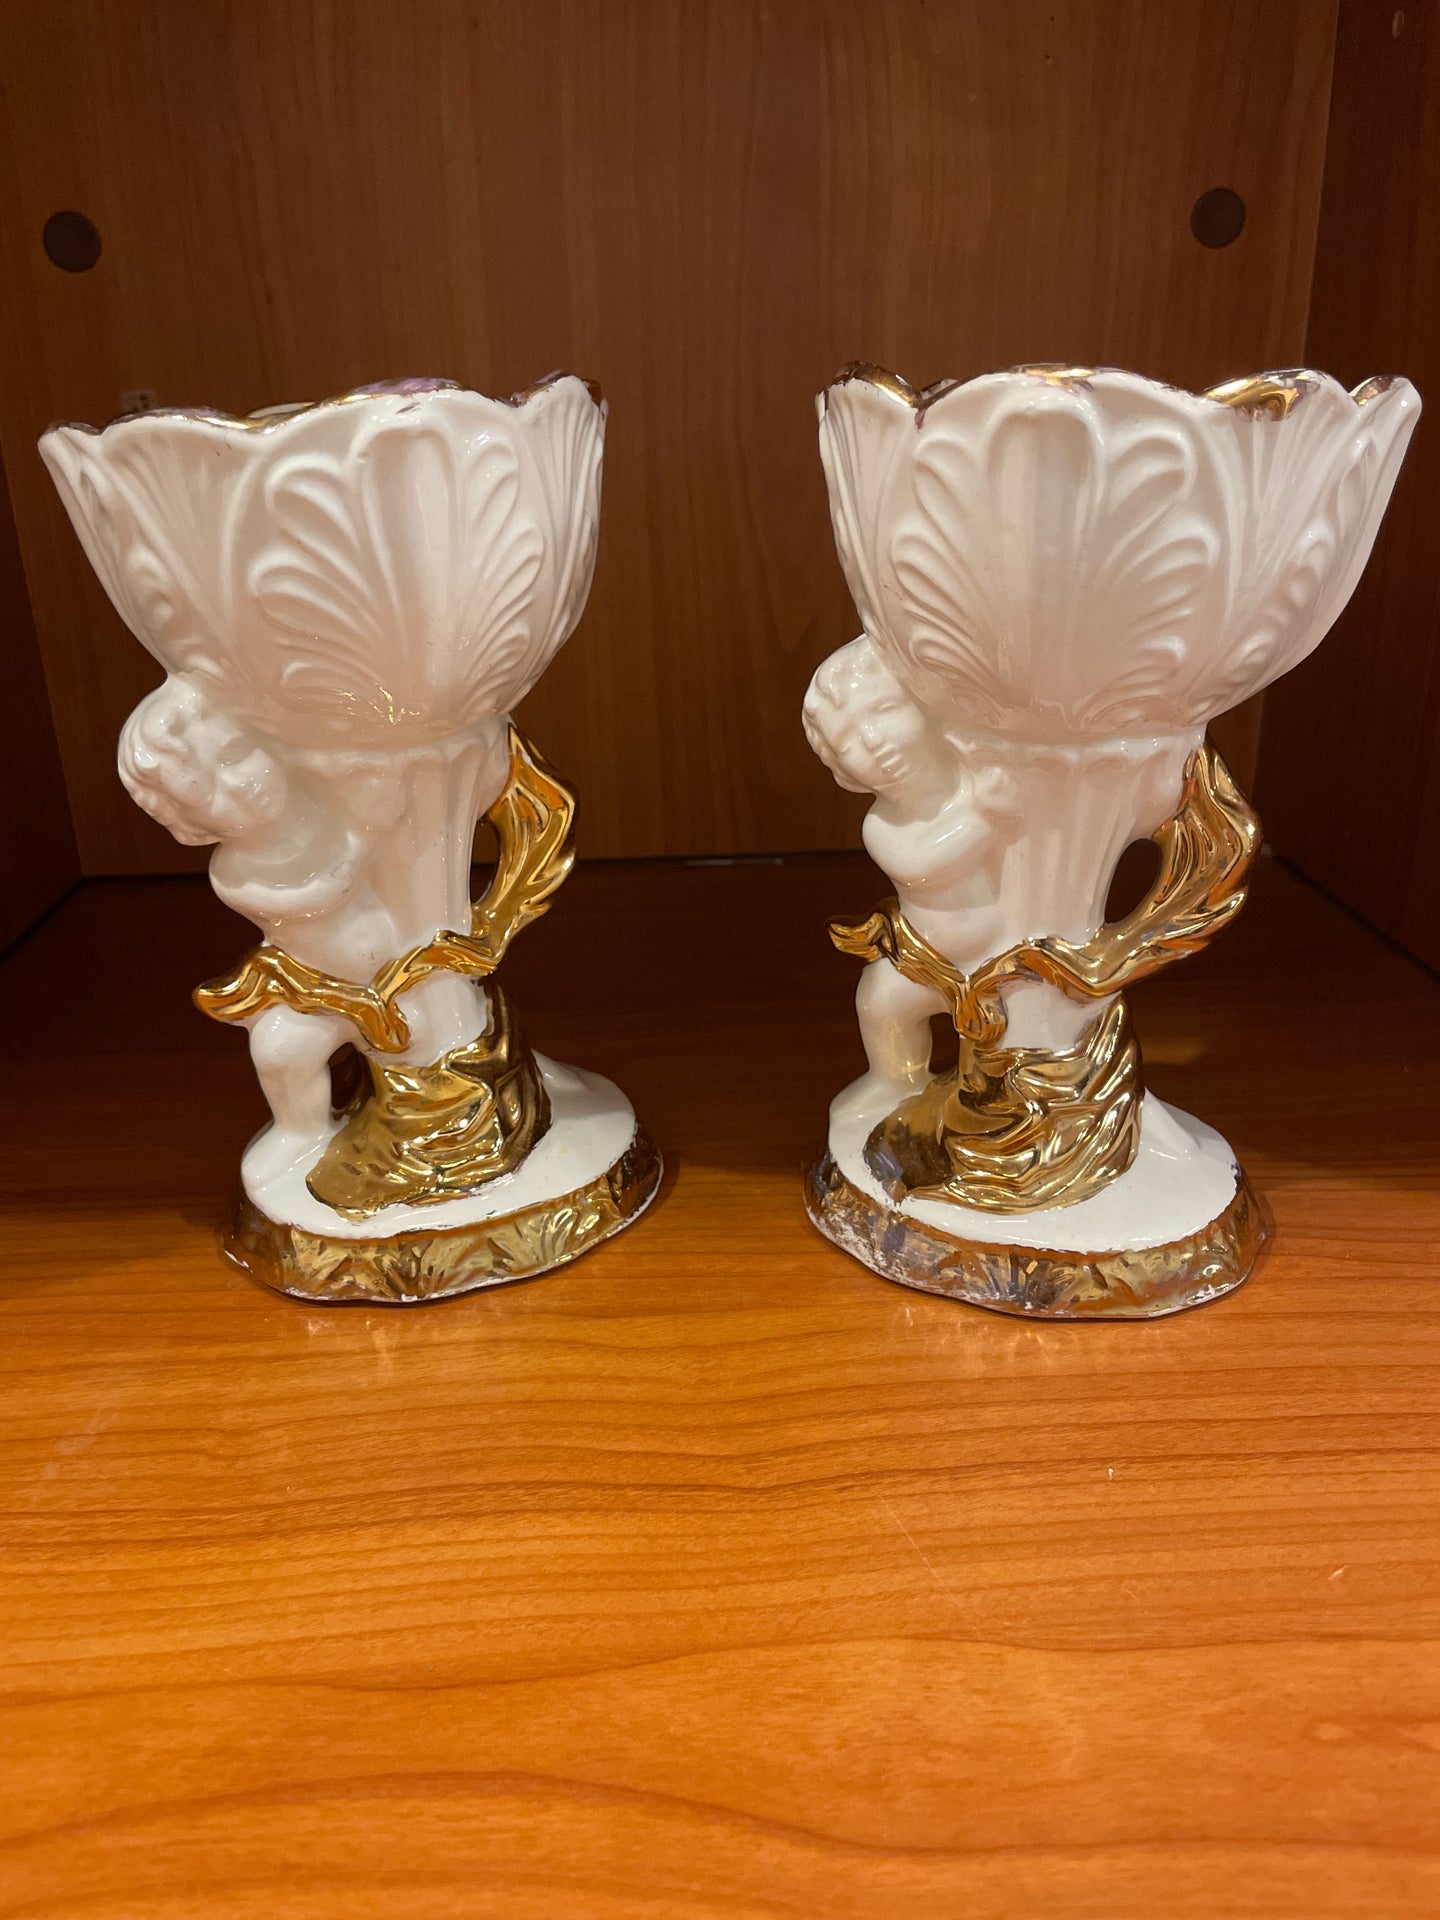 Pair of Ceramic White & Gold Vases with Cherubs